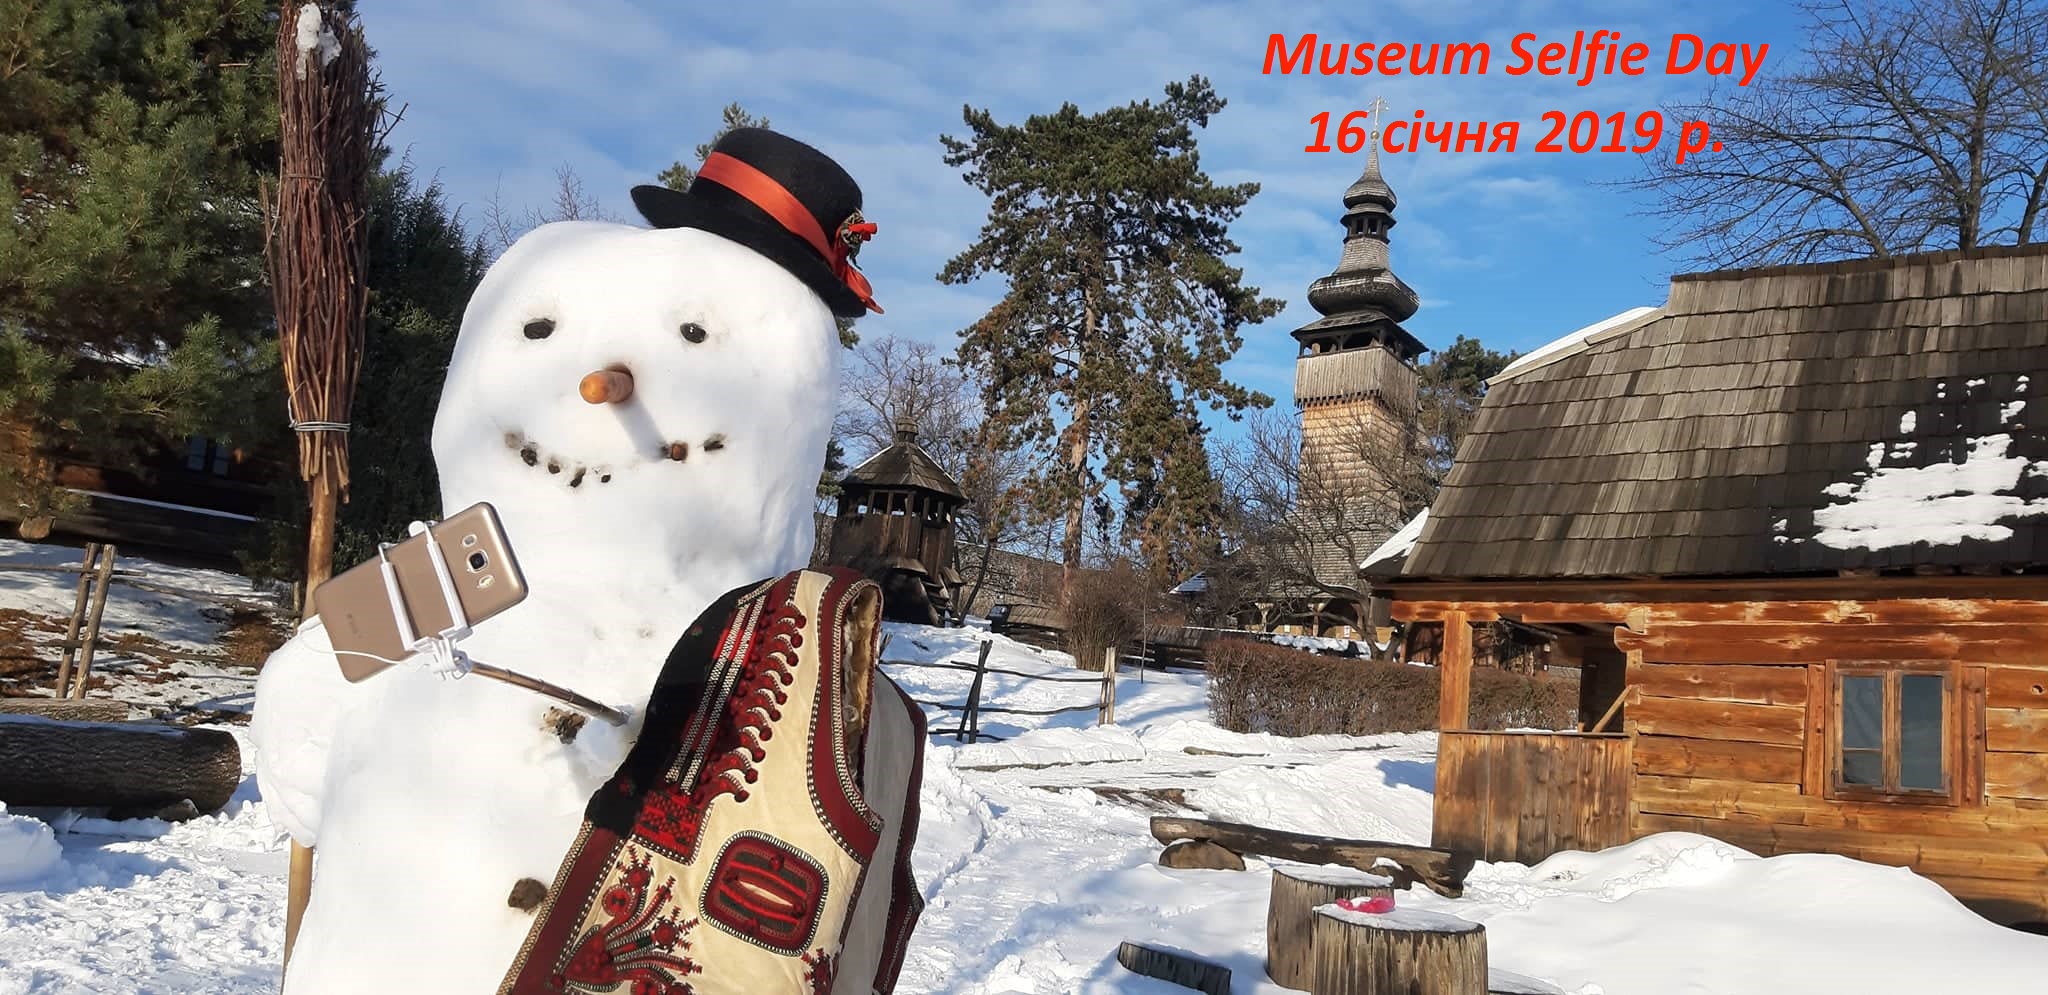 Ужгородський скансен запрошує на Museum Selfie Day  